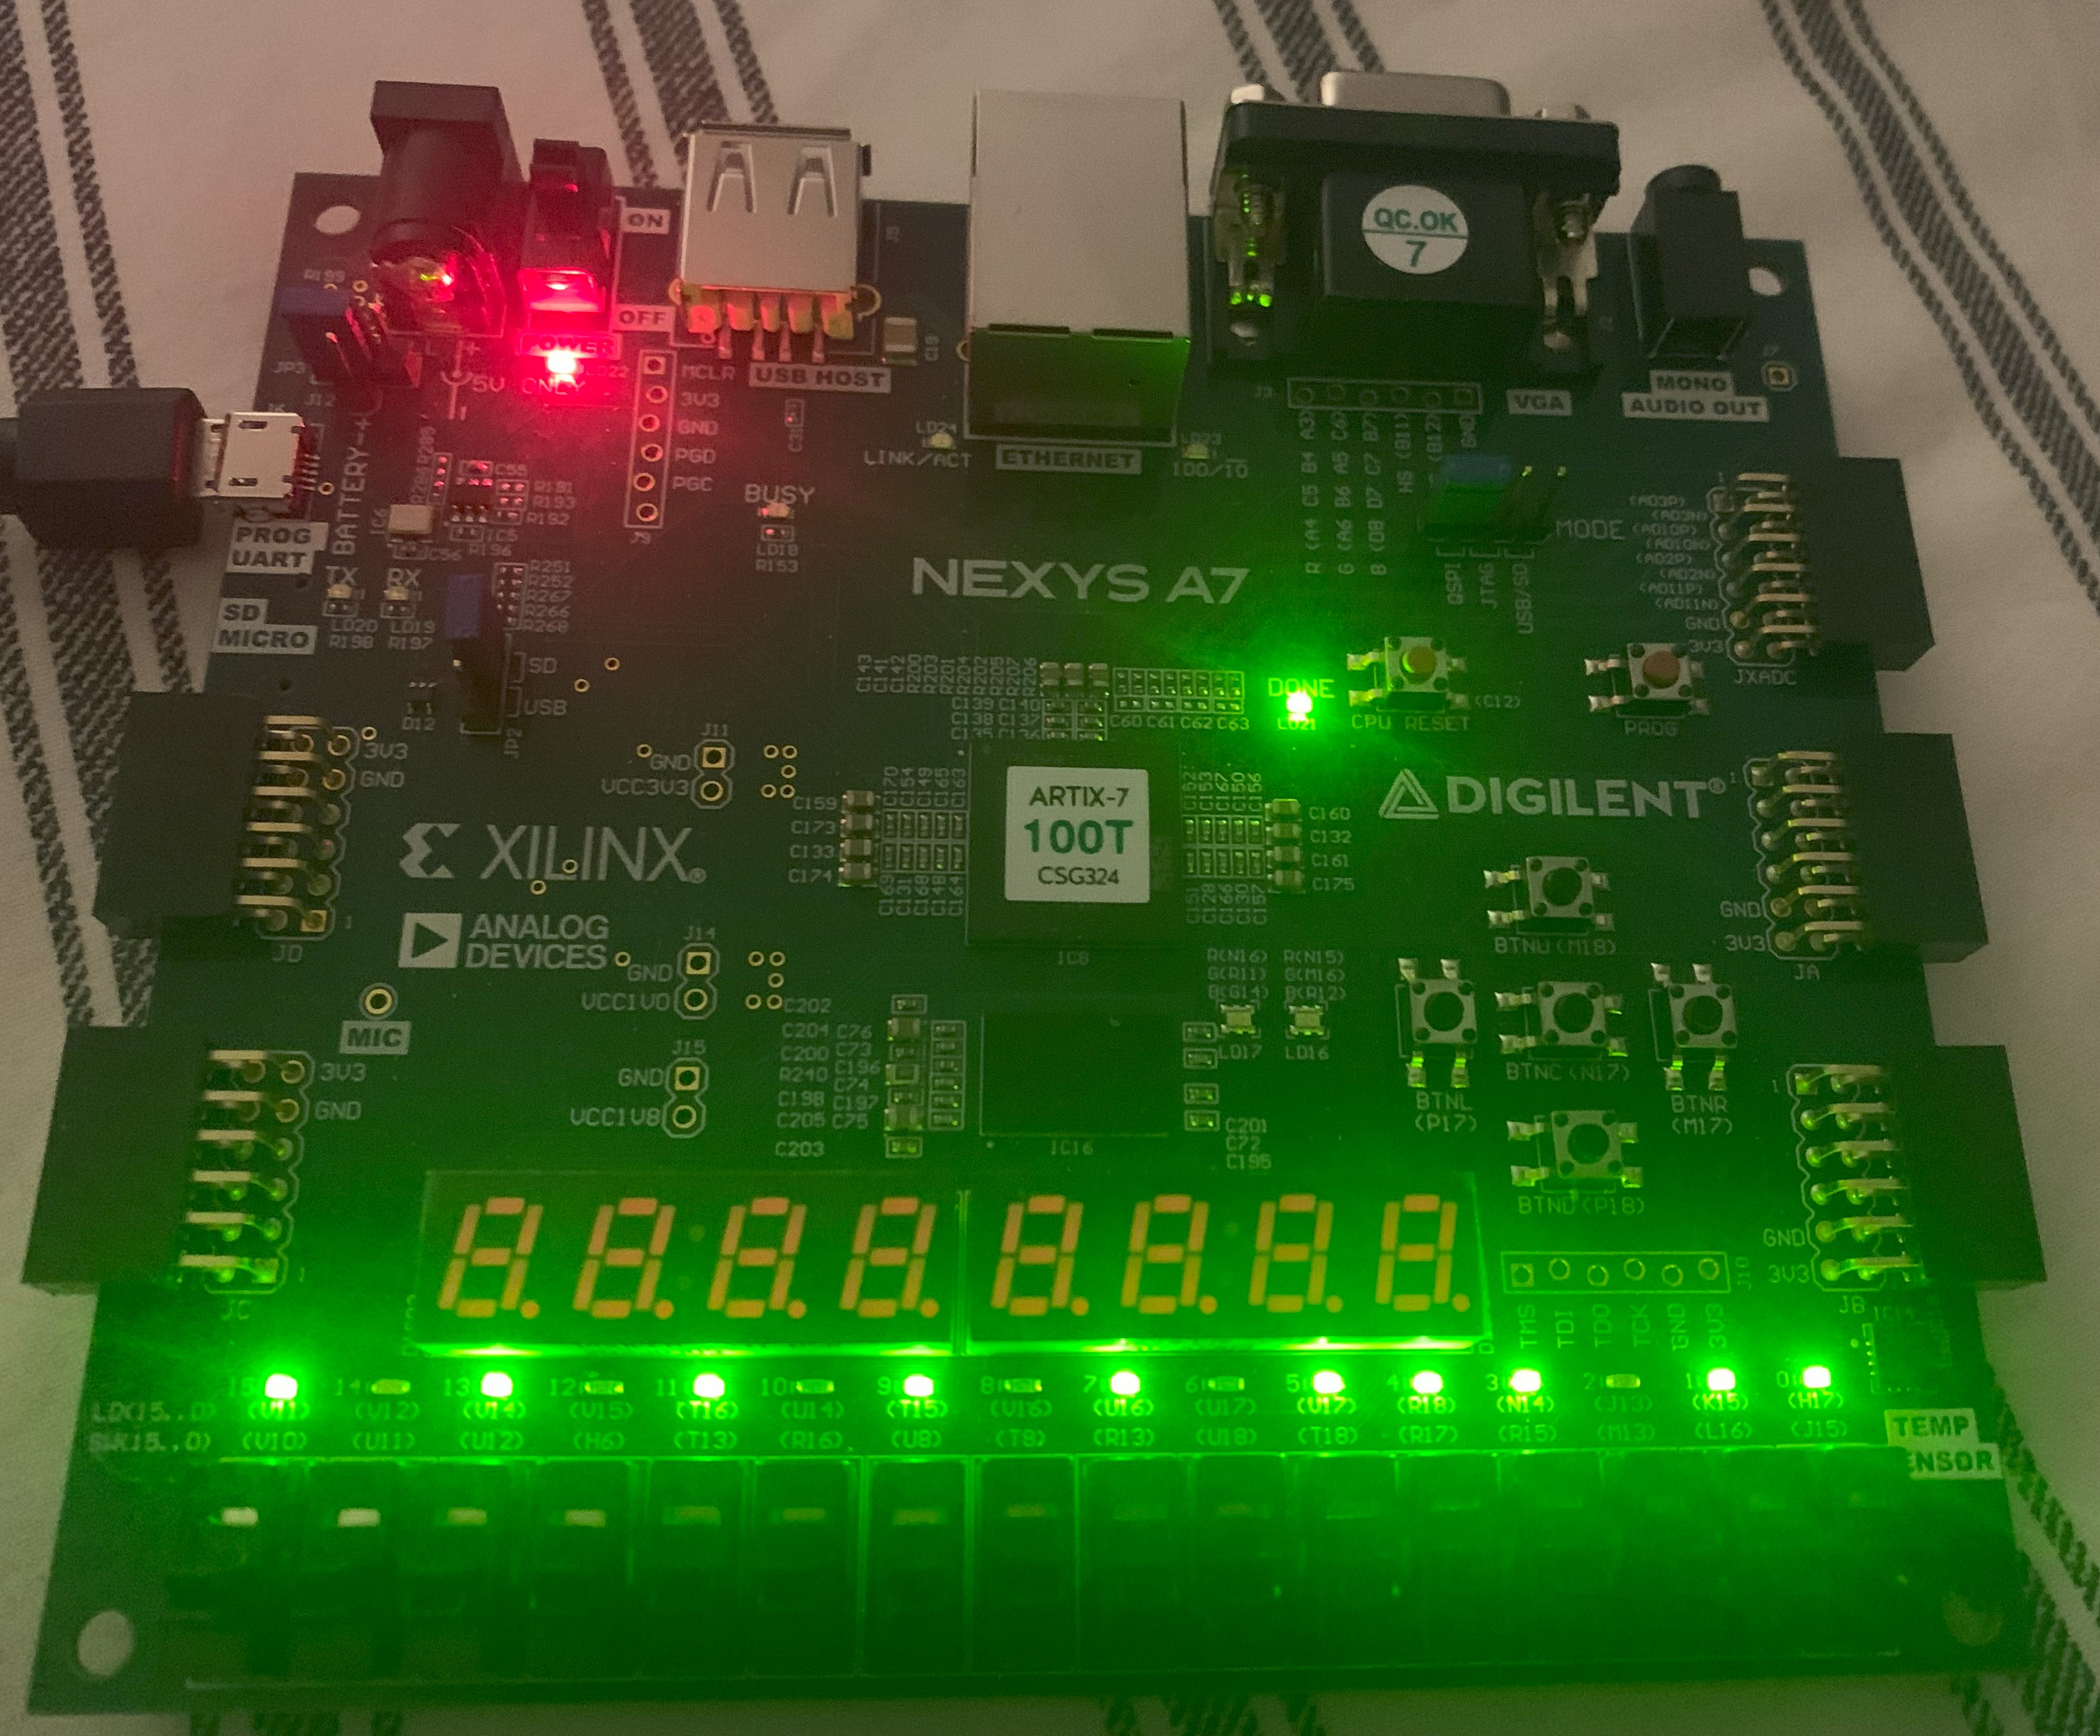 Nexys A7 LED output demonstration